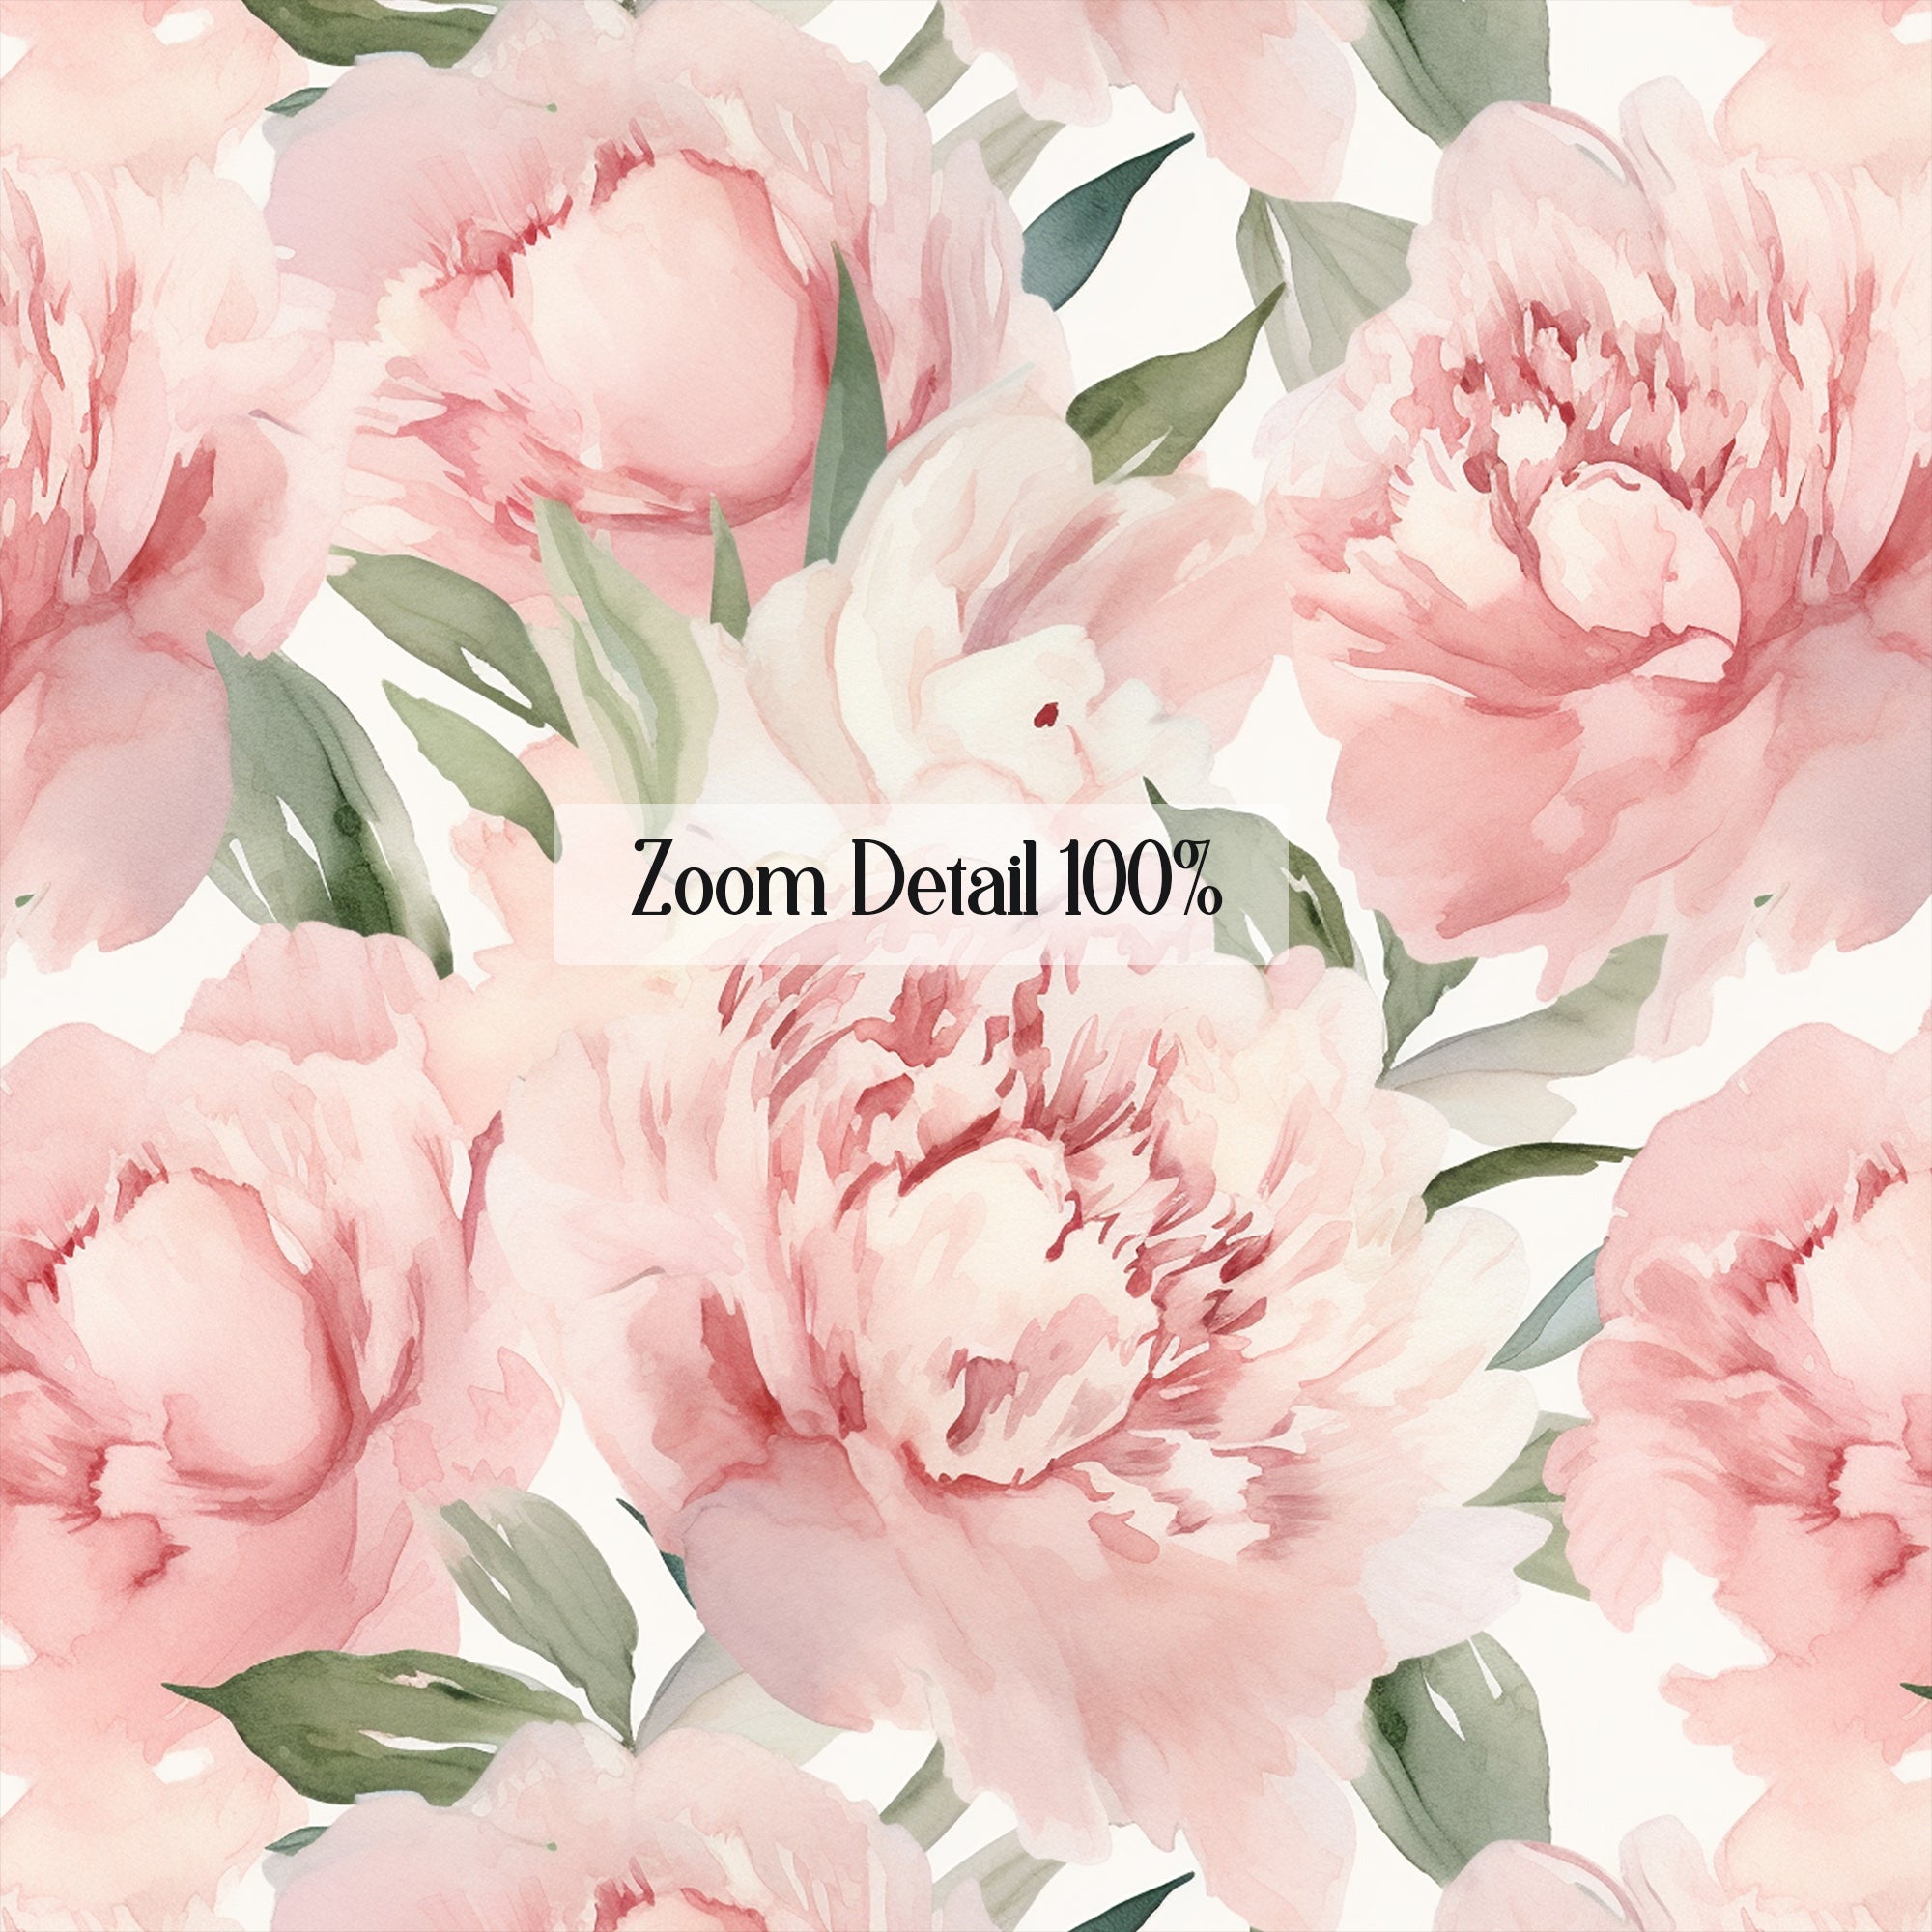 20 Seamless Watercolor Pink Peony Flowers Digital Papers